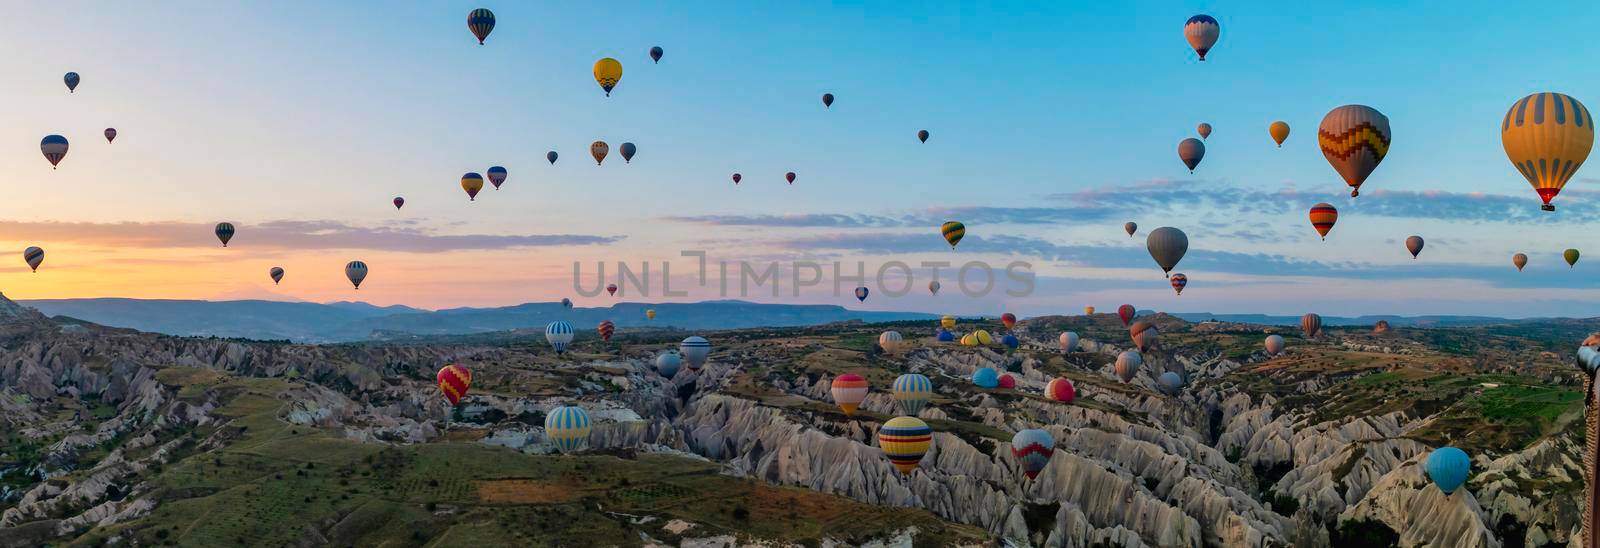 Sunrise with hot air balloons in Cappadocia, Turkey balloons in Cappadocia Goreme Kapadokya, and Sunrise in the mountains of Cappadocia.